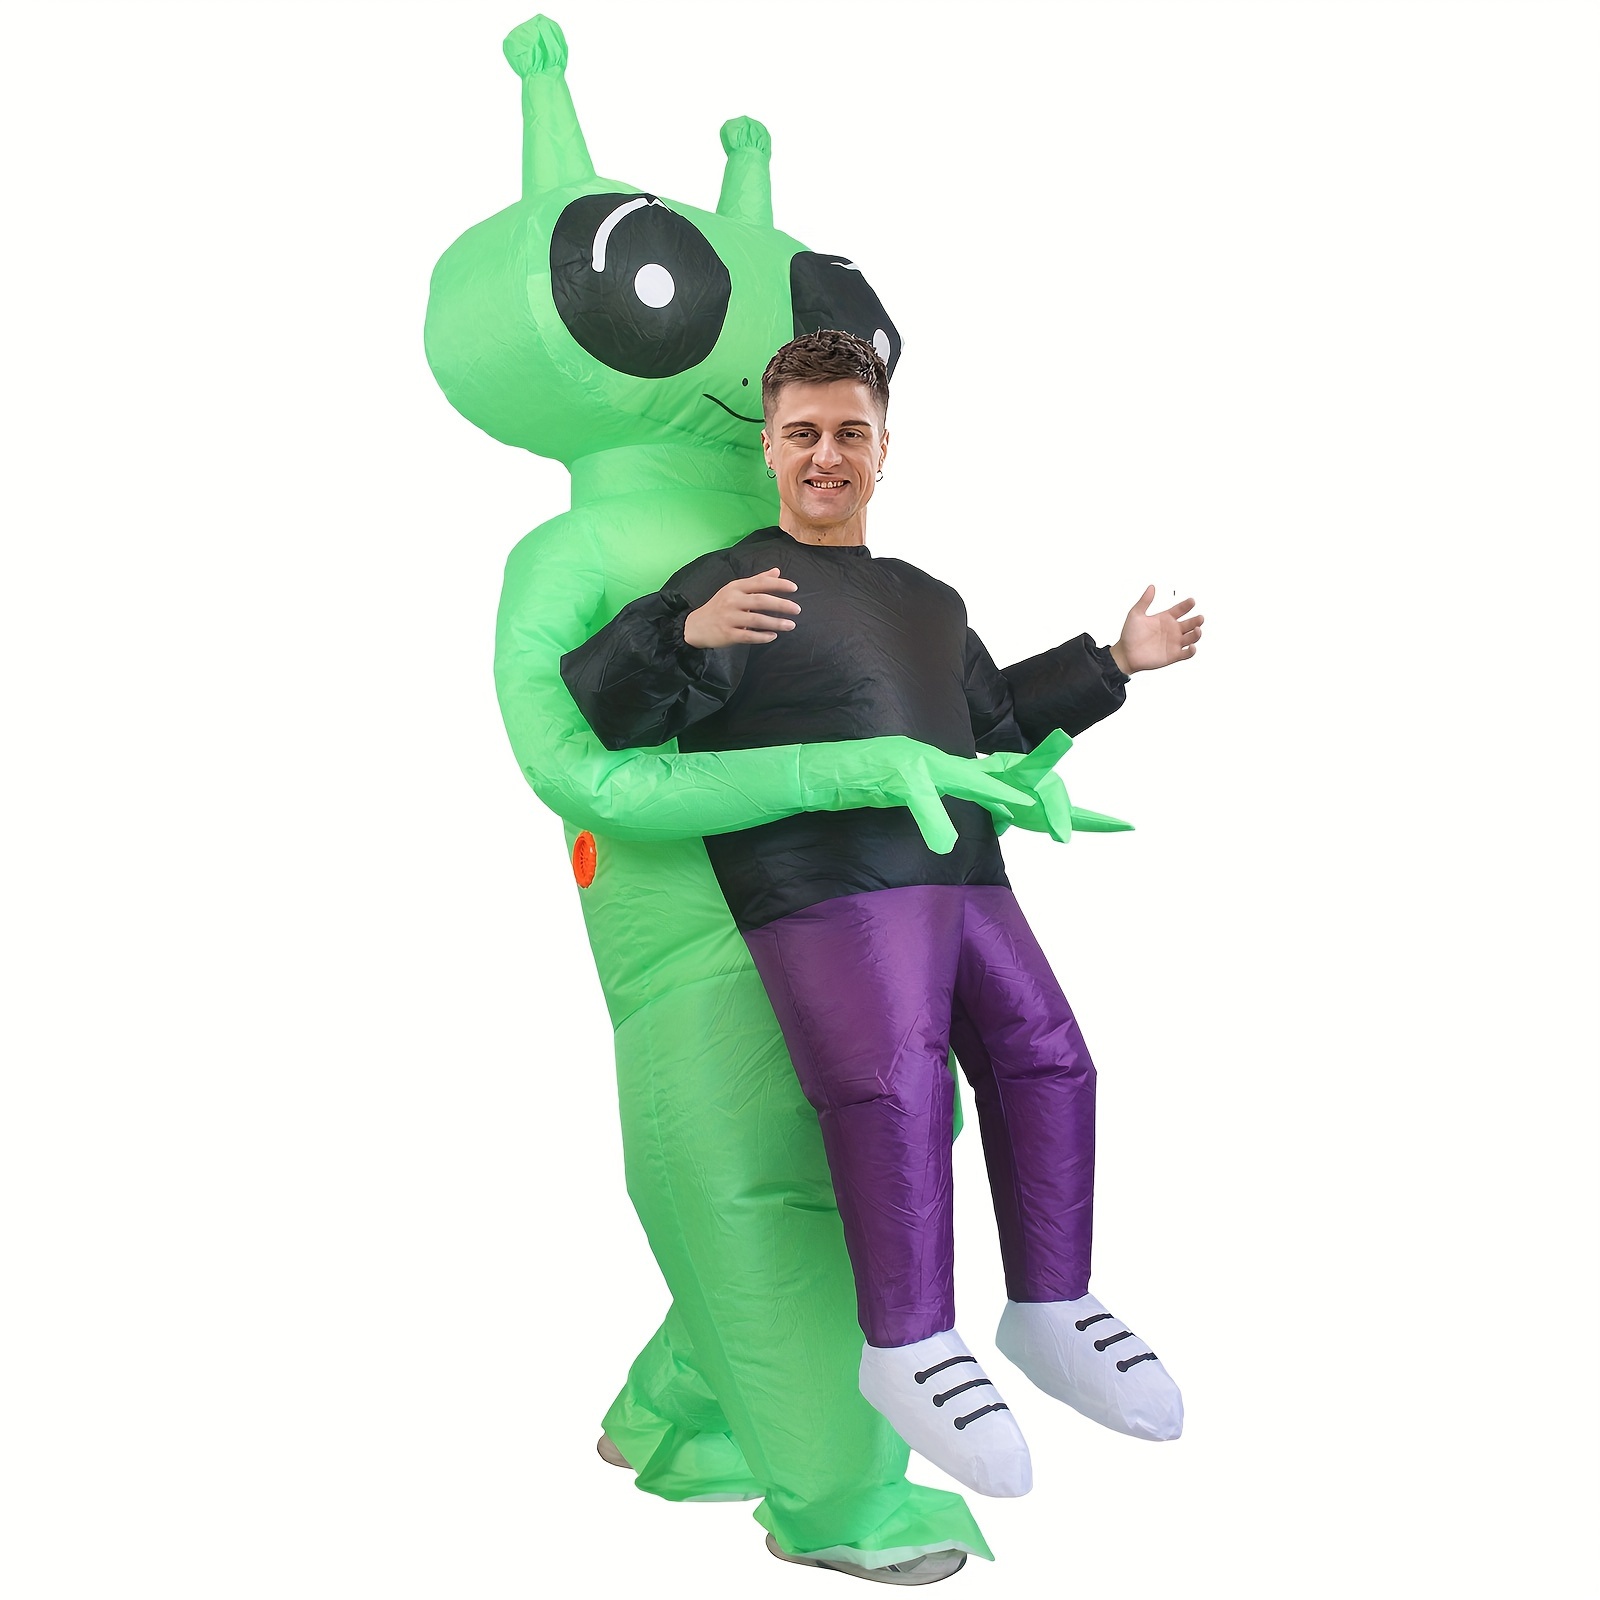 Comprar Disfraz de Alien Verde Tunica - Disfraces Halloween